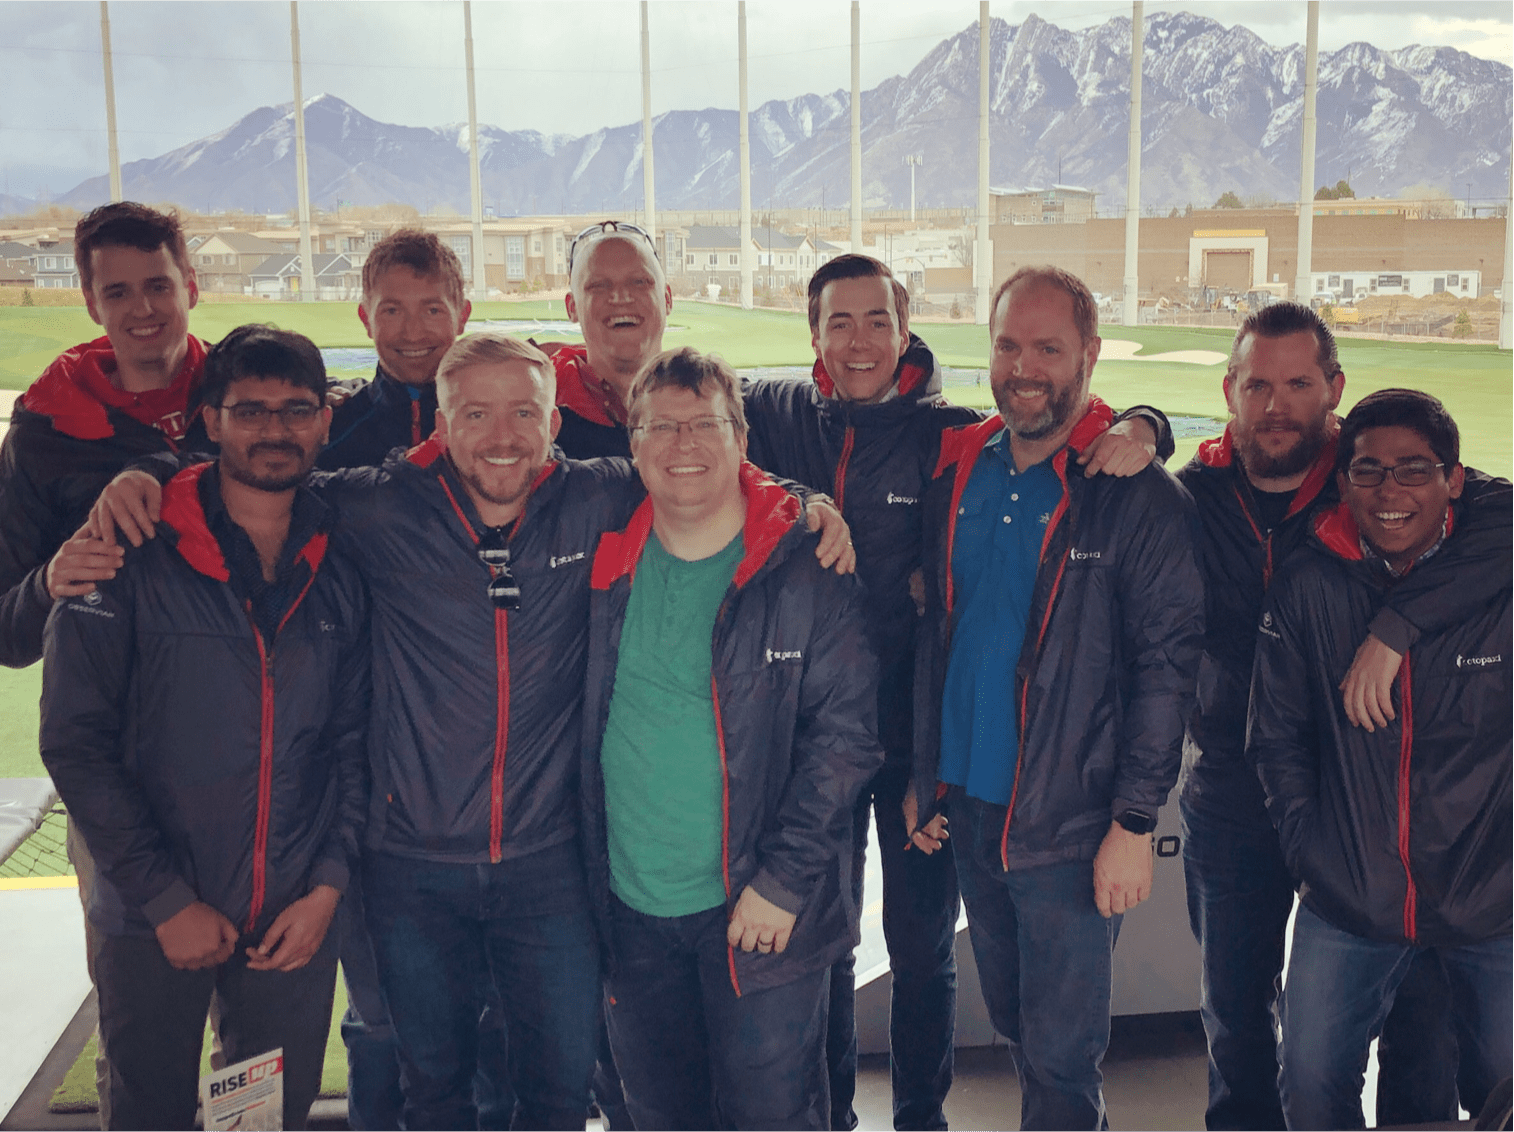 Our team of cloud computing experts in Utah